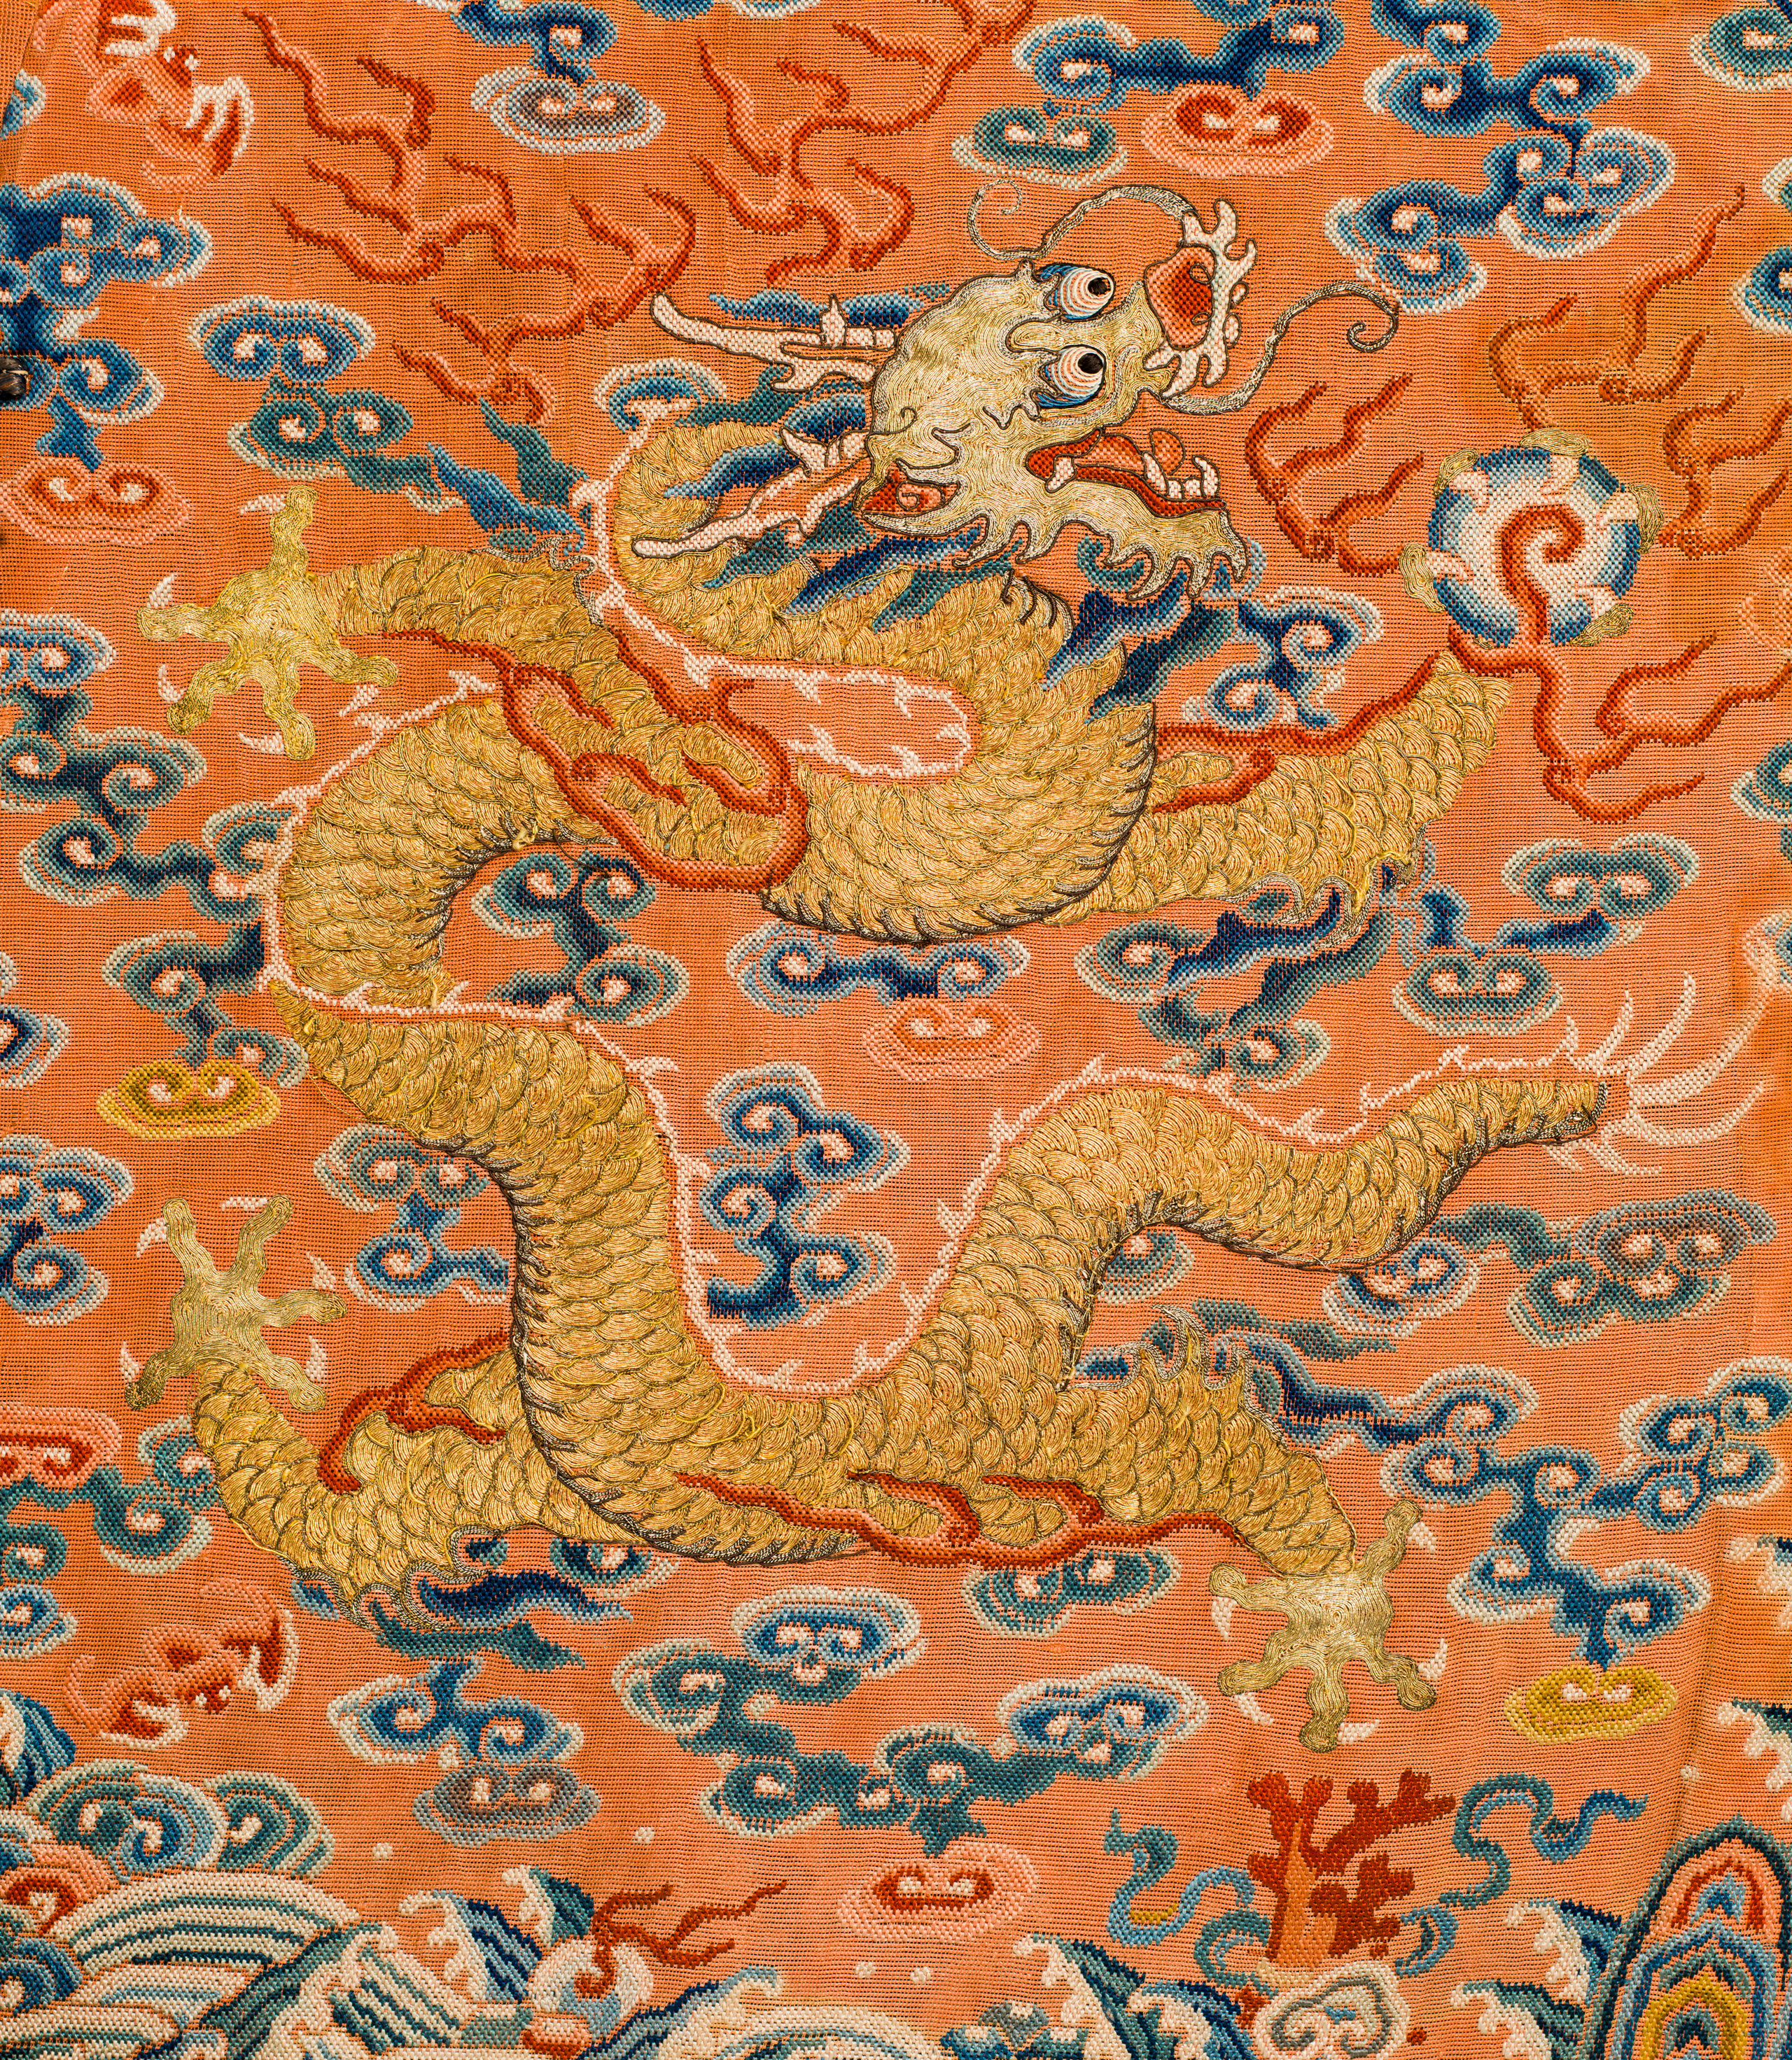 Silk gauze dragon robe from China